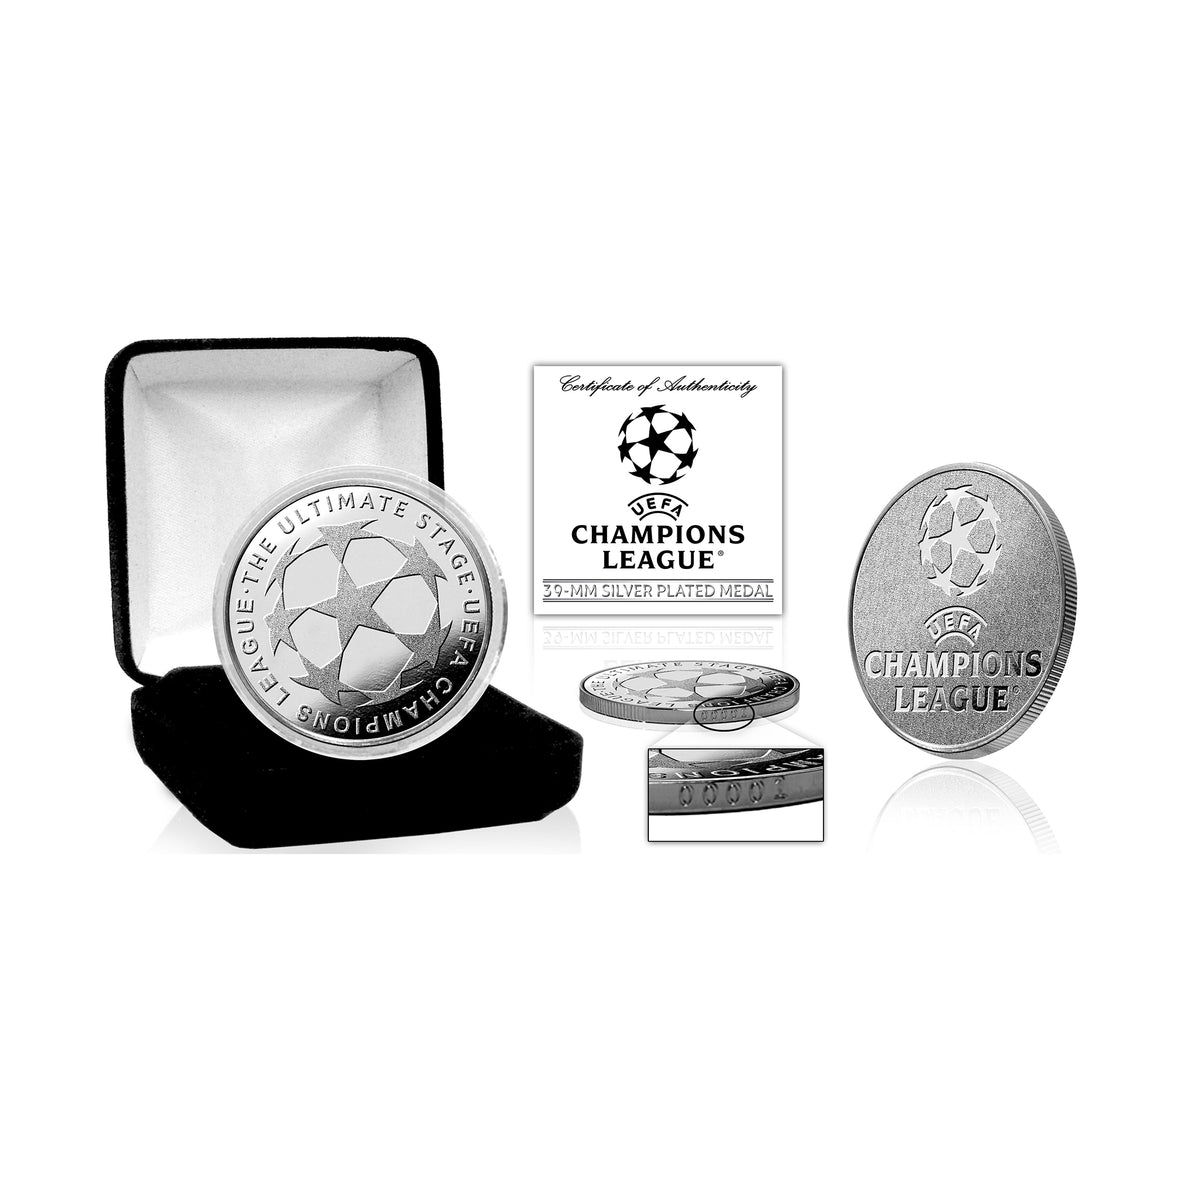 Champions League Commemorative Coin in Gift Box